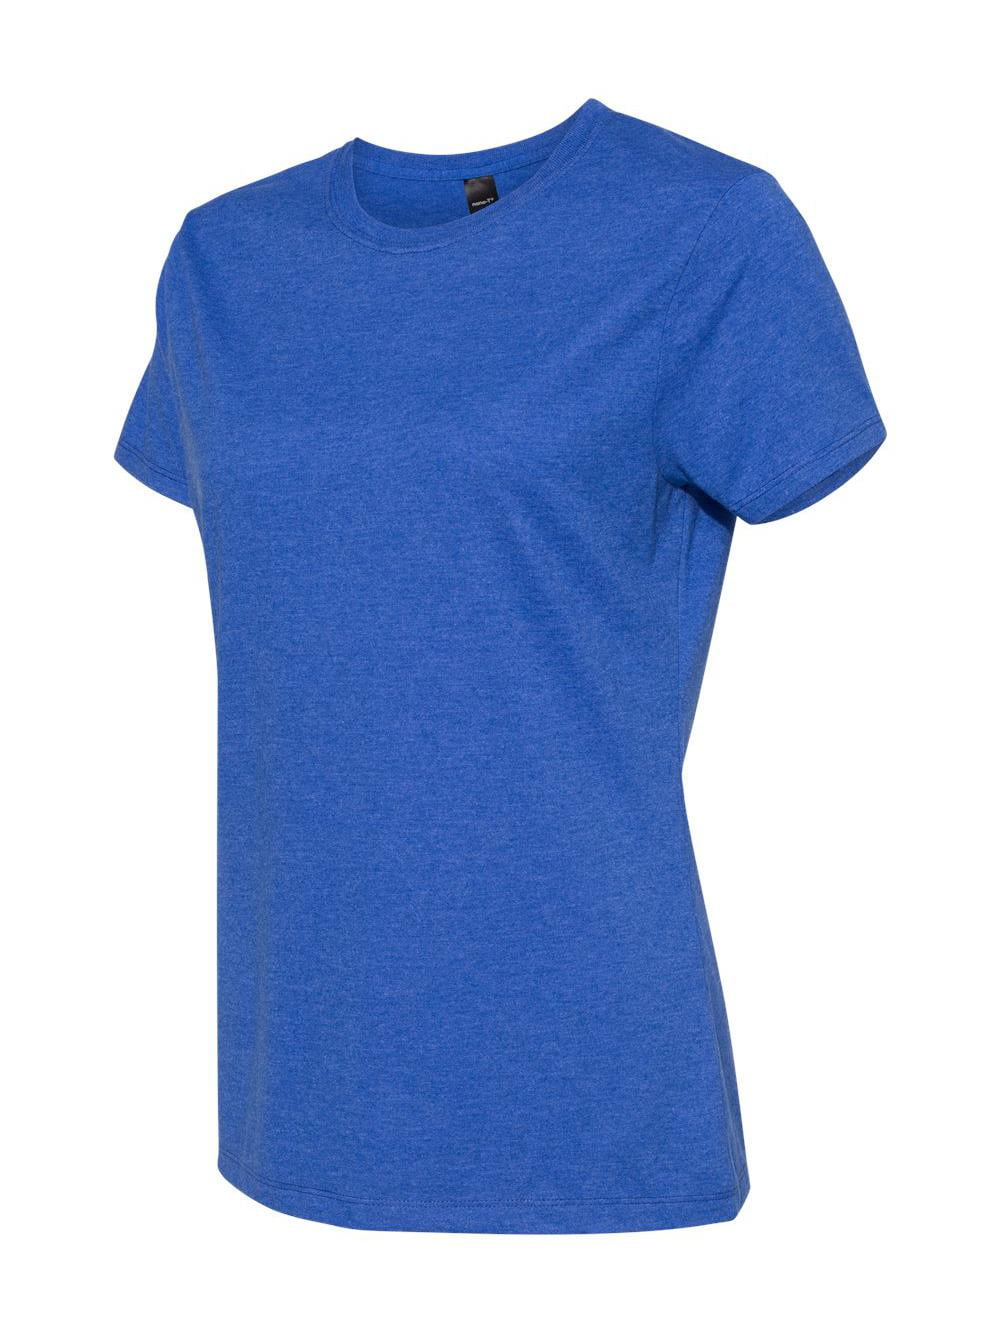 Hanes Women's Nano-T Short Perfect Sleeve T-Shirt - Walmart.com